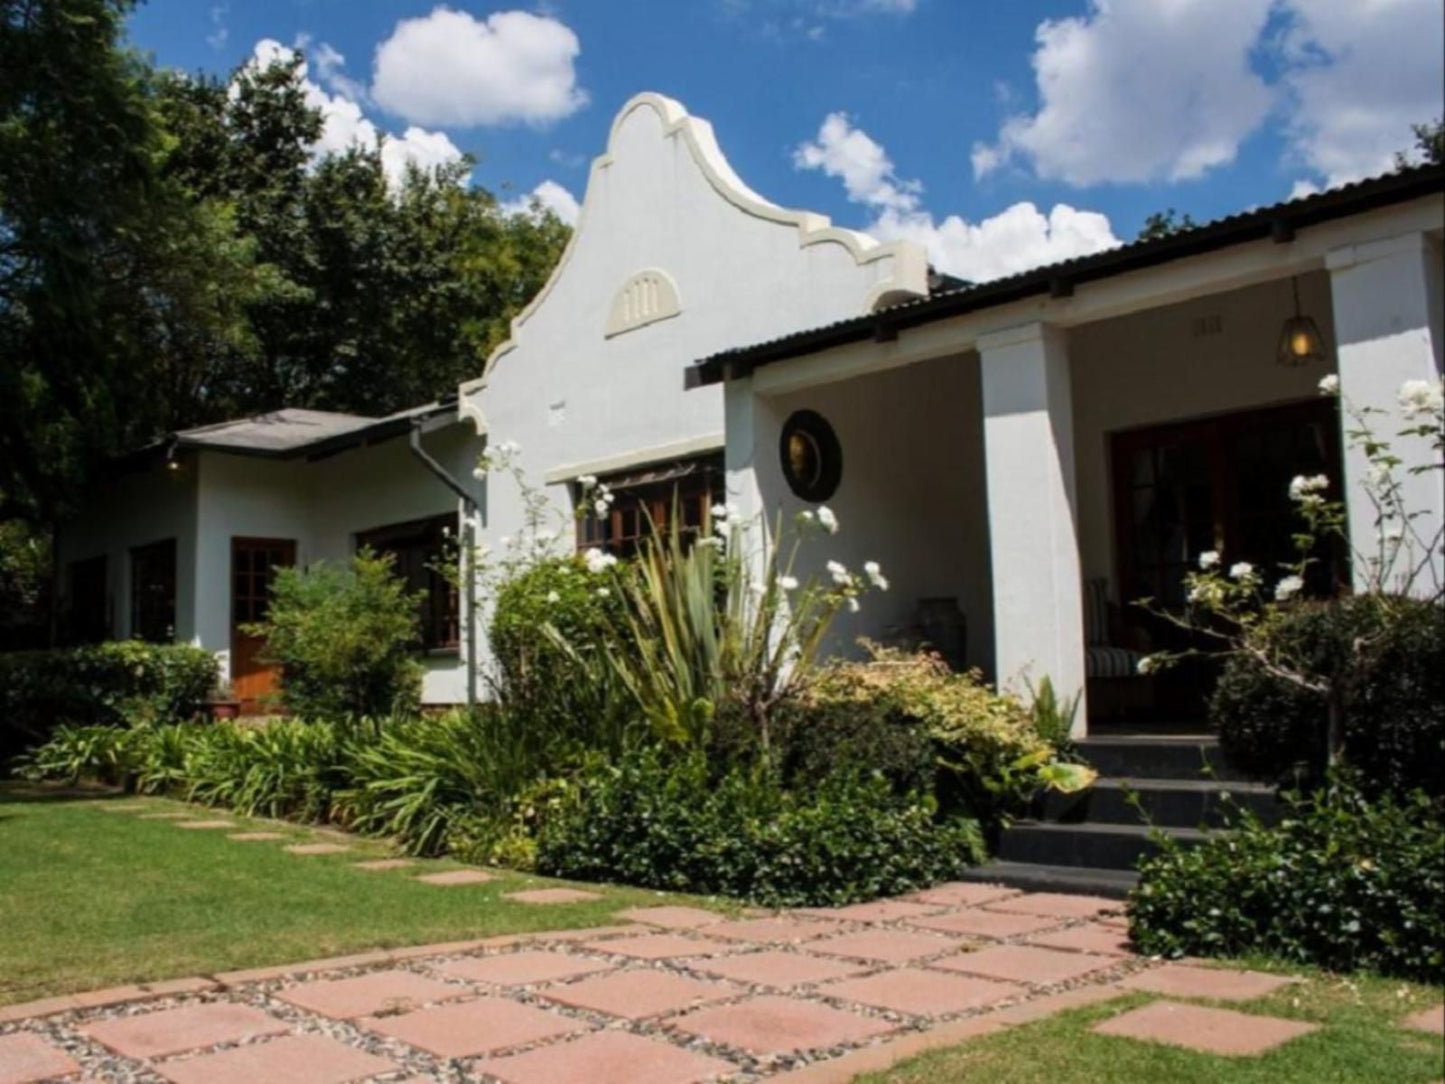 Brooks Cottage Brooklyn Pretoria Tshwane Gauteng South Africa House, Building, Architecture